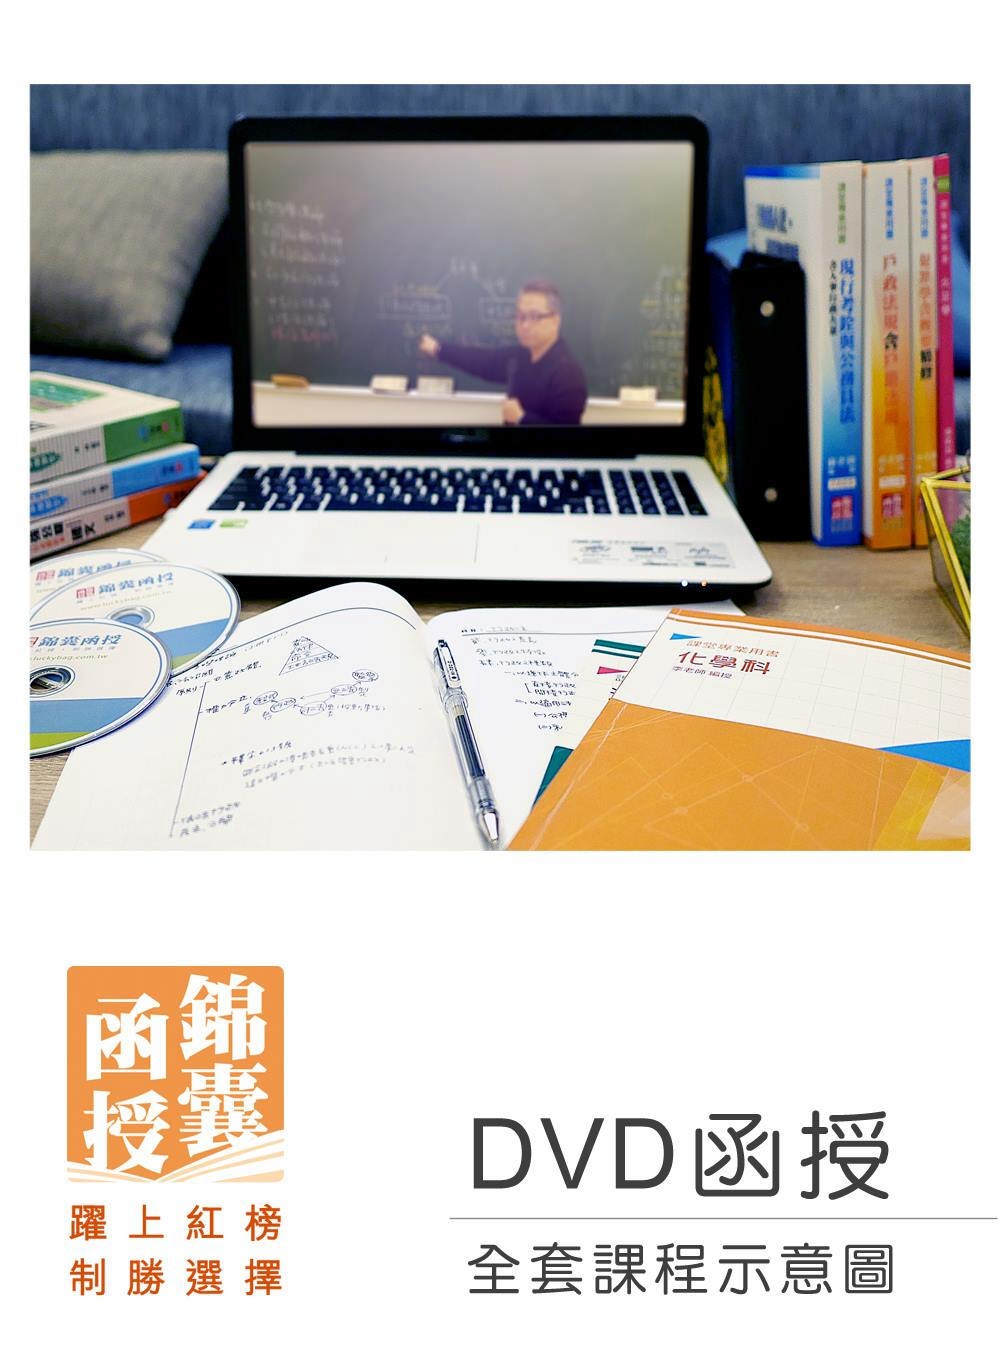 【DVD函授】111年台電新進雇員(綜合行政人員)-全套課程